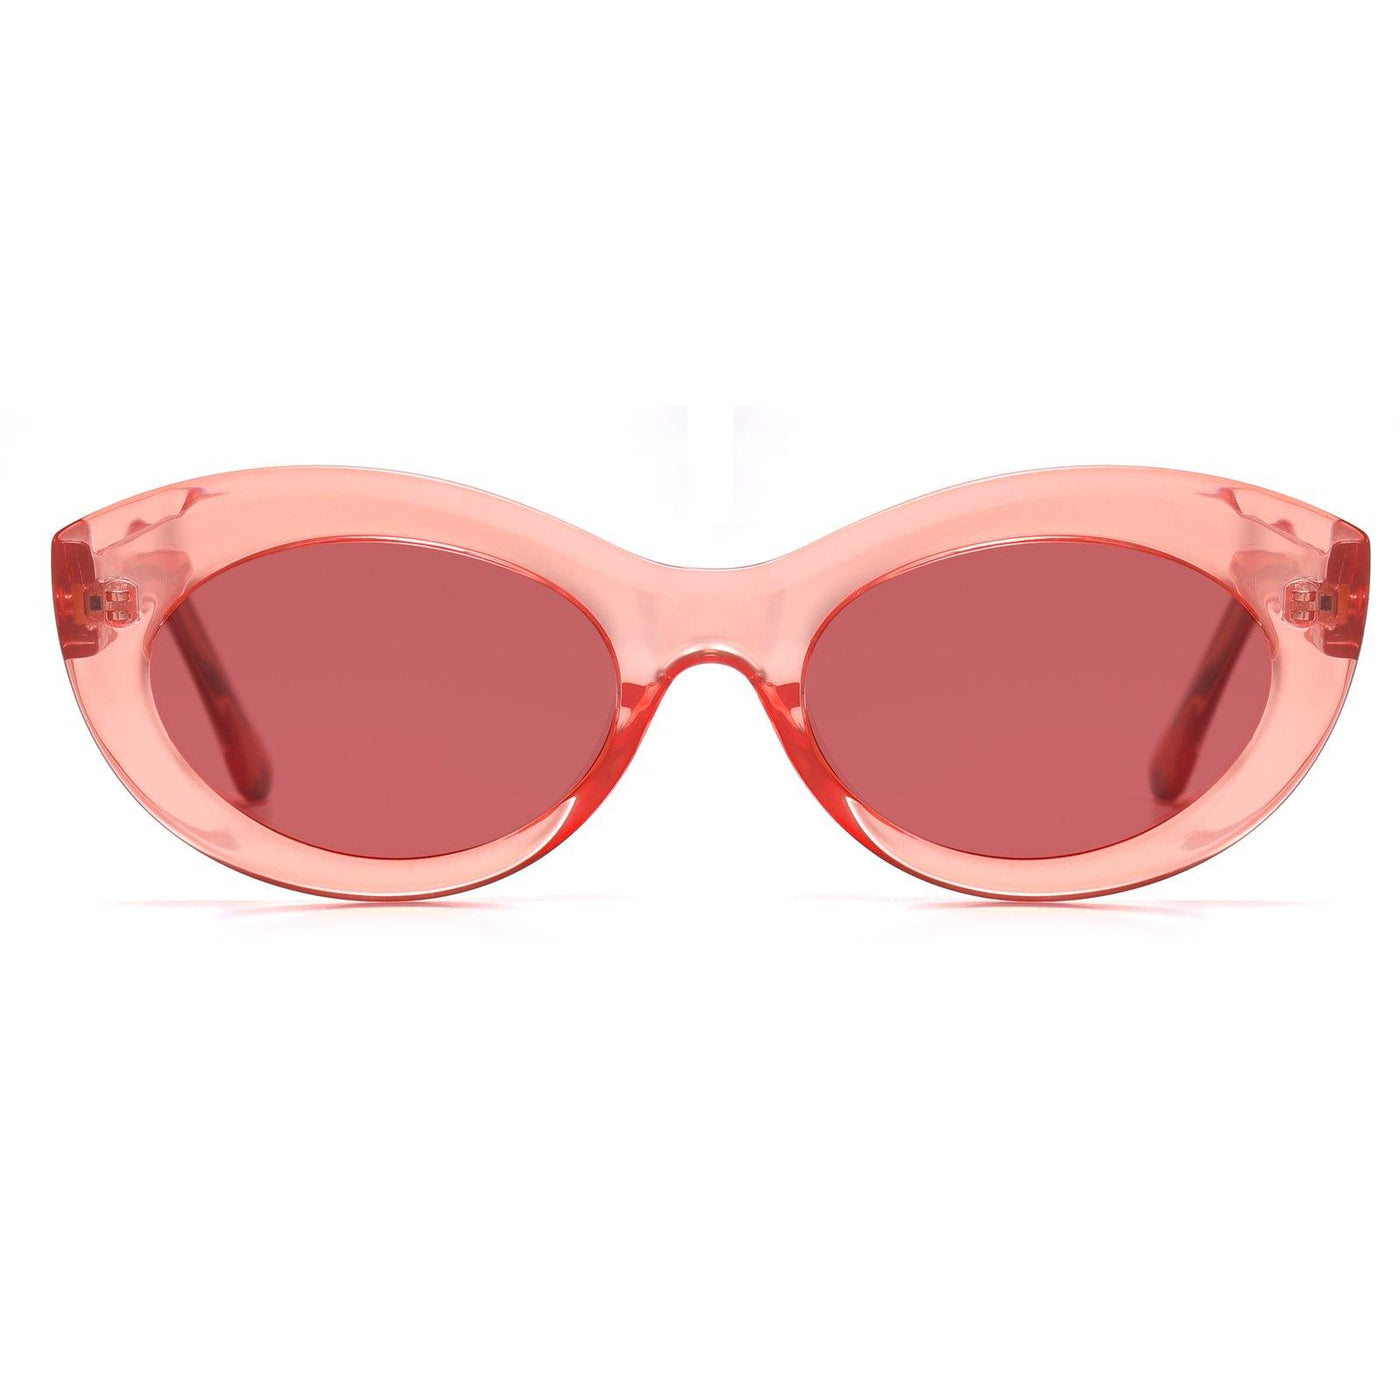 DUCO GLASSES-The right kind of shady DUCO Polarized Sunglasses for Women UV Protection Retro Designer Vintage Cateye Sunglasses DC1223 Duco Sunglasses